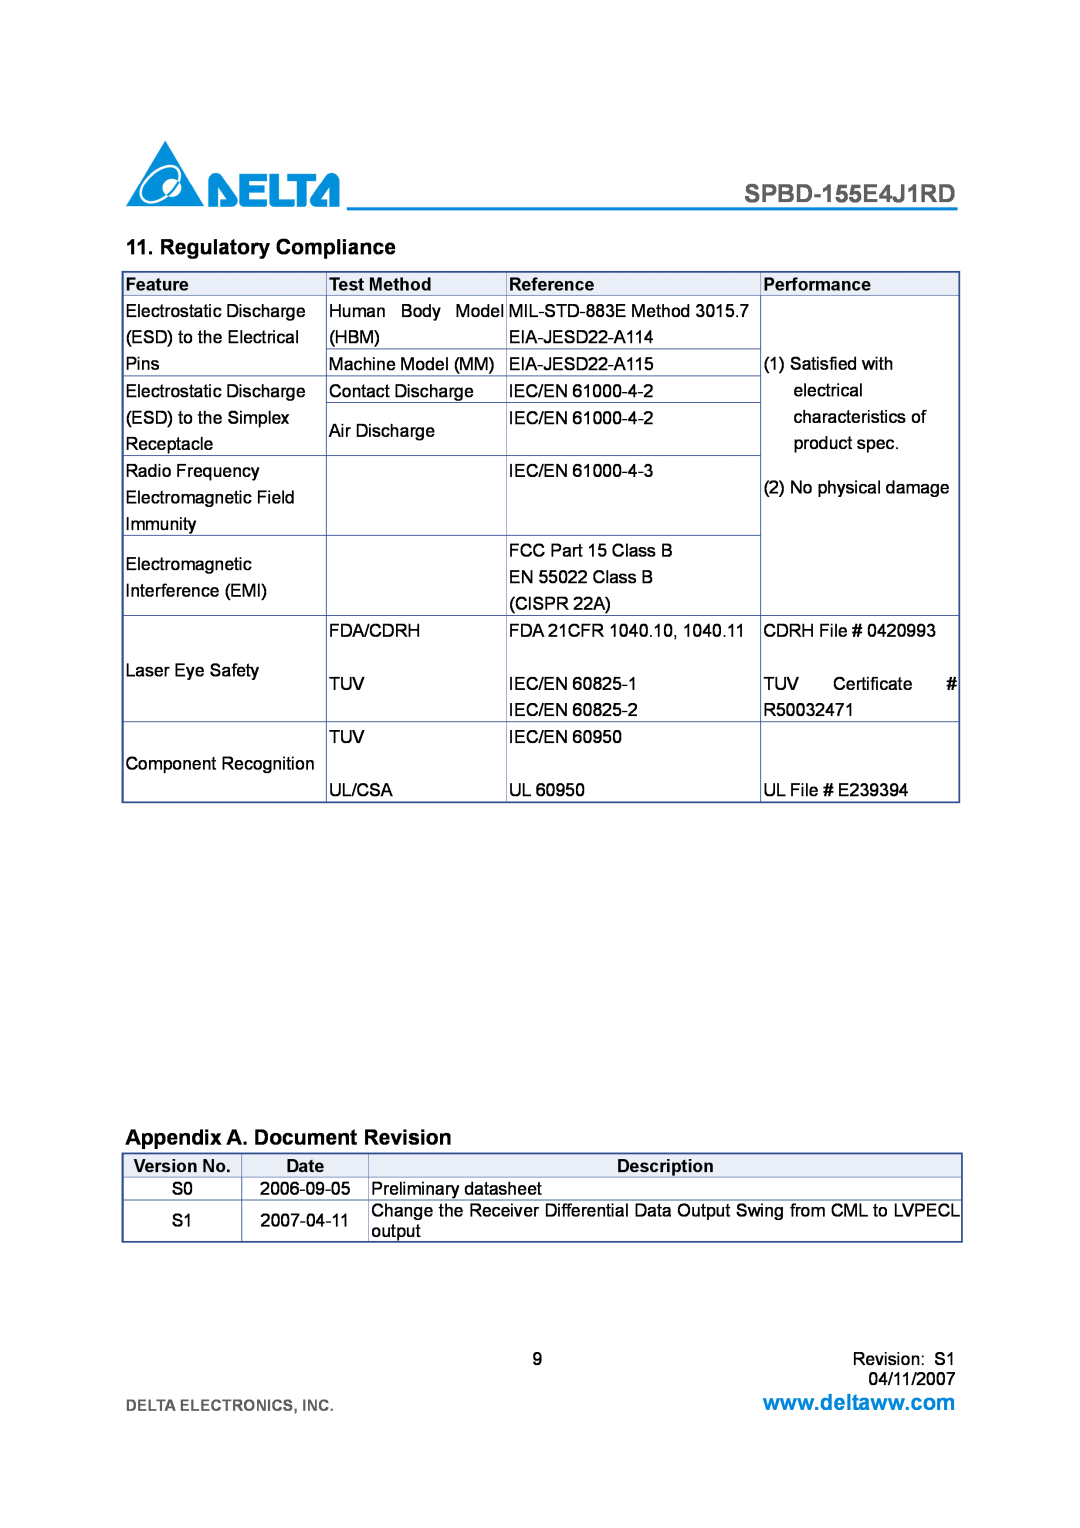 Delta Electronics SPBD-155E4J1RD Regulatory Compliance, Appendix A. Document Revision, Feature, Test Method, Reference 